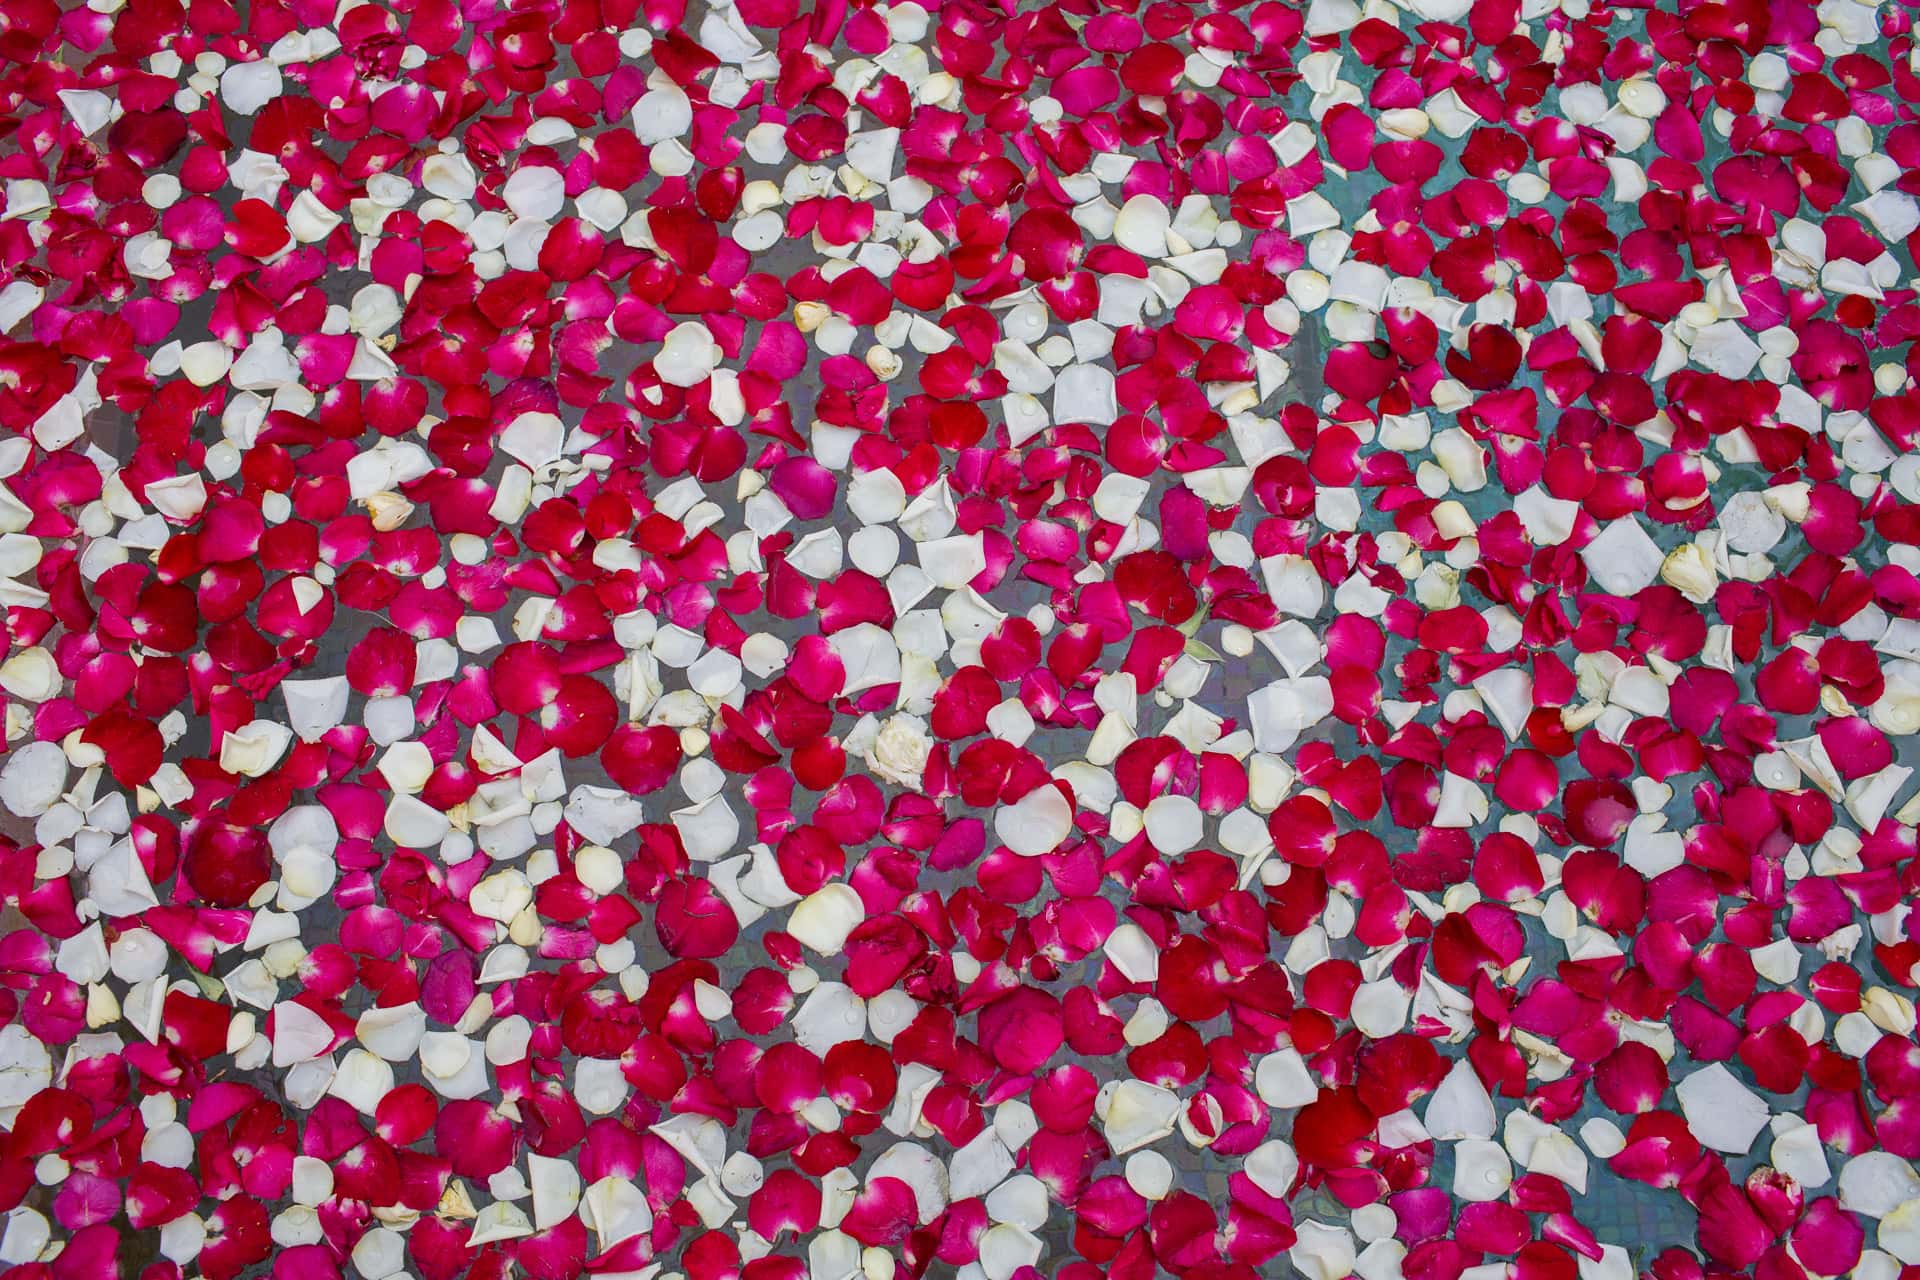 flower petals in swimming pool